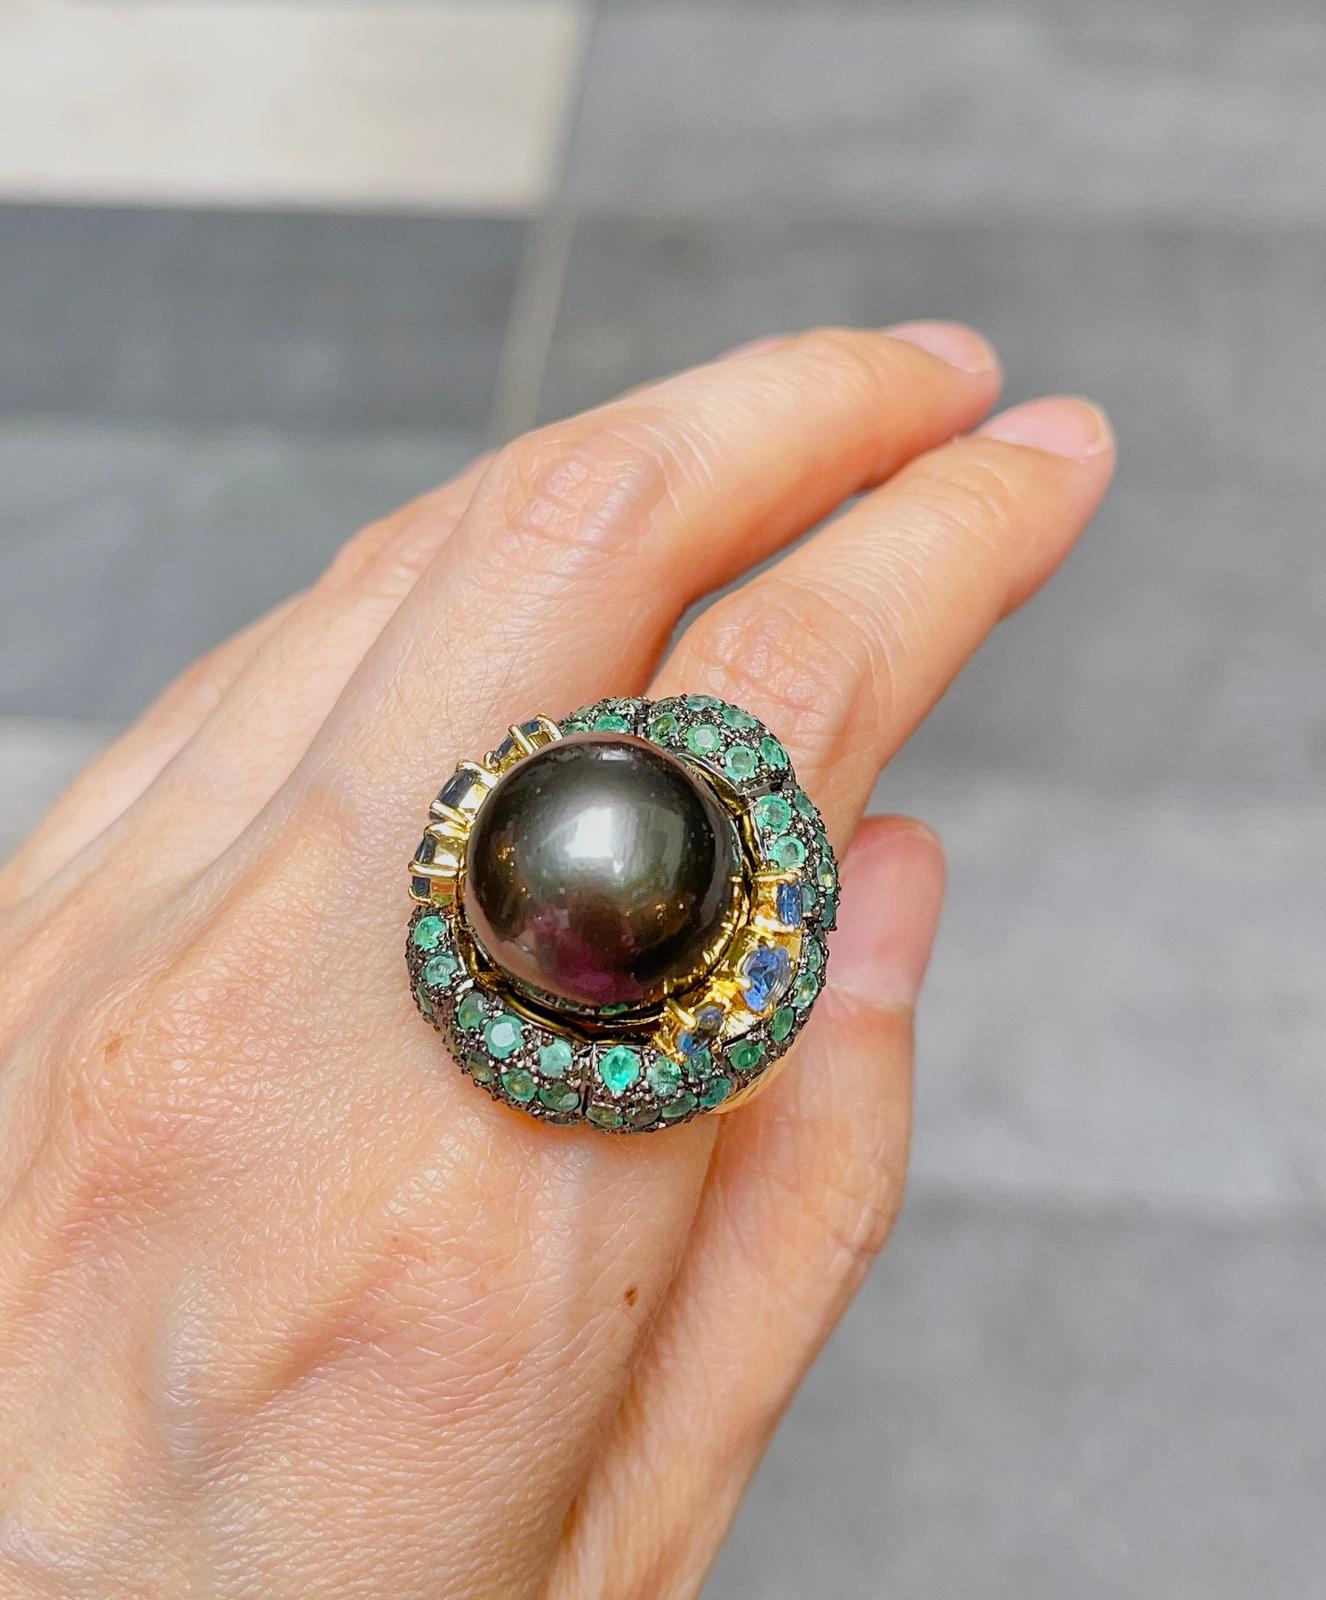 Bochic “Capri” Black Pearl & Emerald / Sapphire Cocktail Ring Set in 22k Gold 7